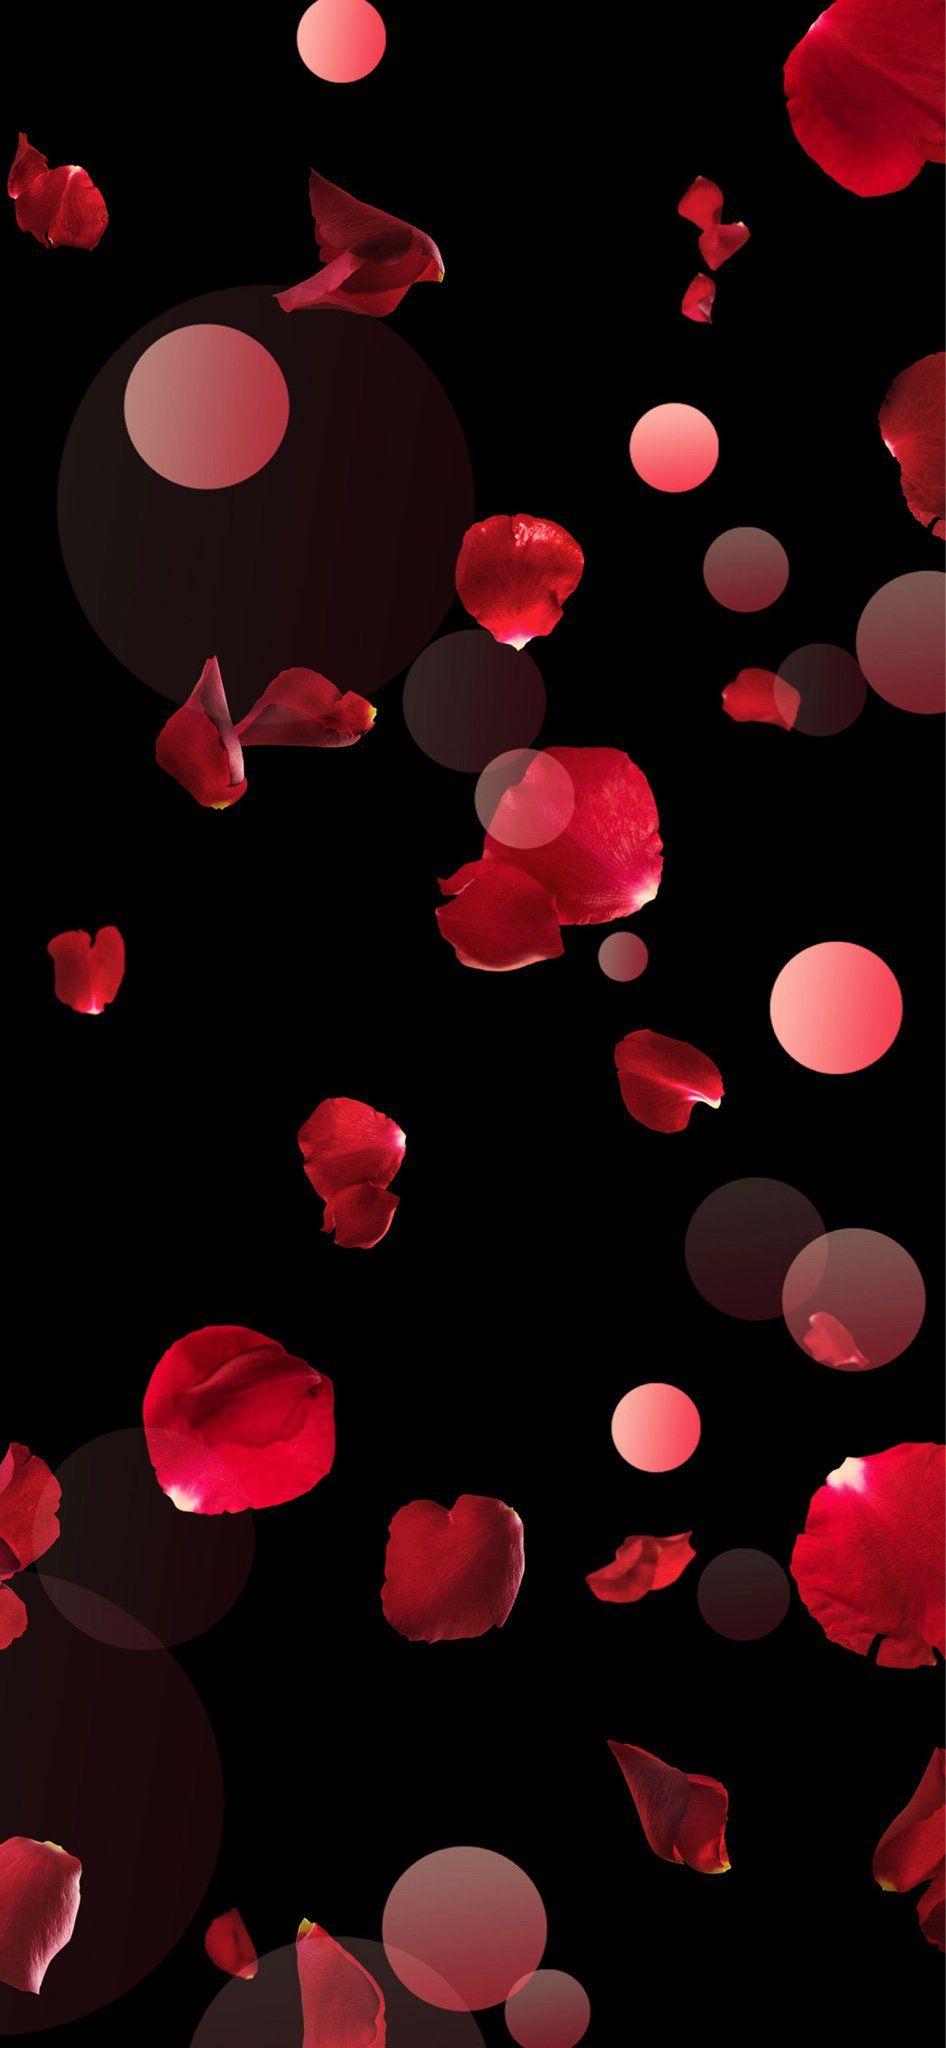 Rose Petals. Wallpaper. Wallpaper, Cellphone wallpaper